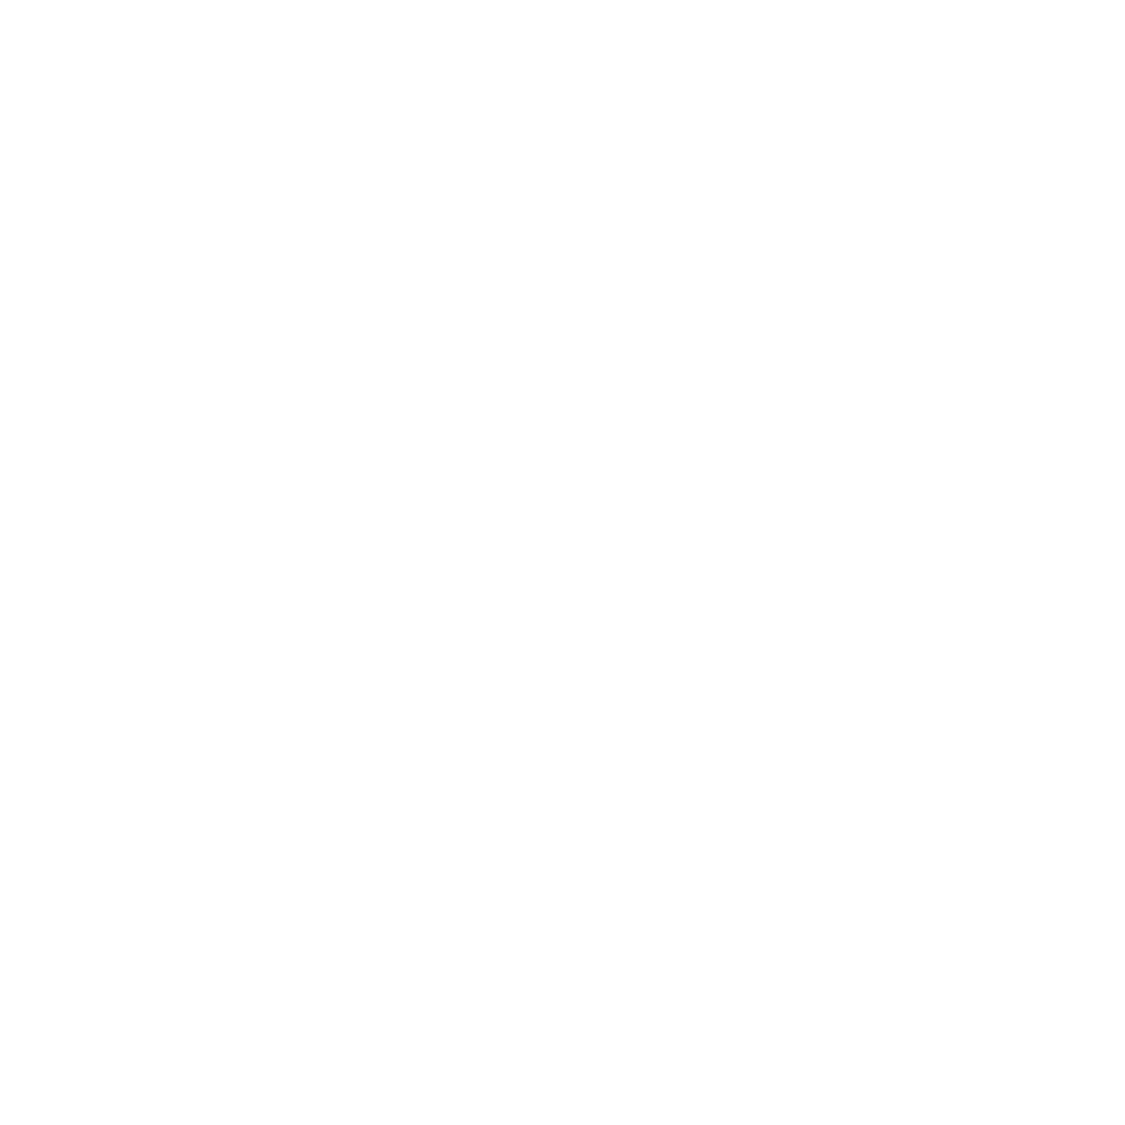 Texas city badges: Dallas, TX 'Big D'; Houston, TX; and Austin, TX